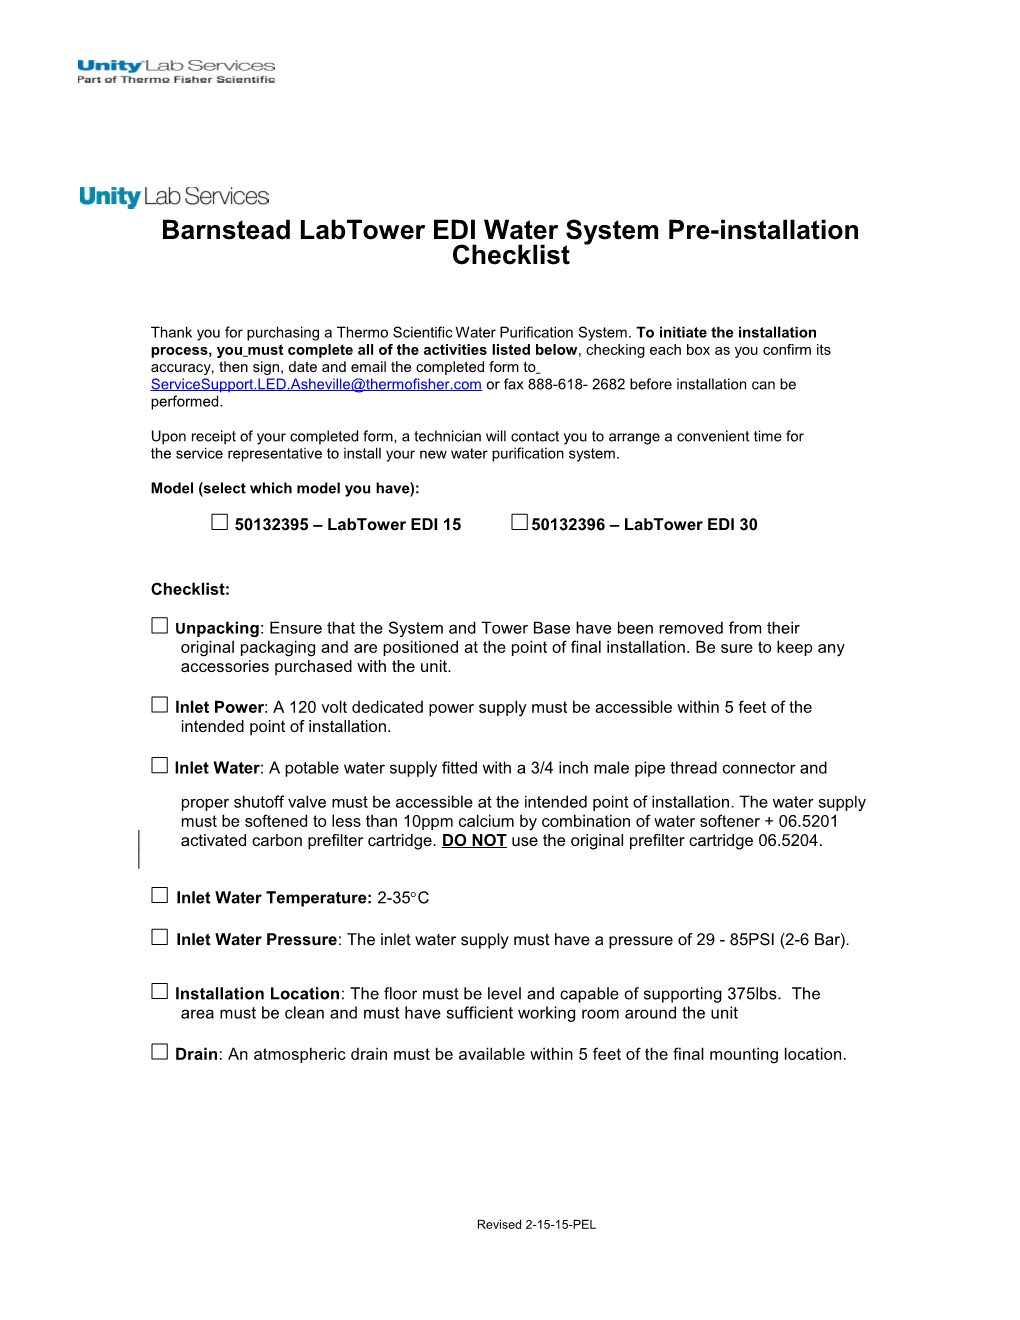 Barnstead Labtower EDI Water System Pre-Installation Checklist